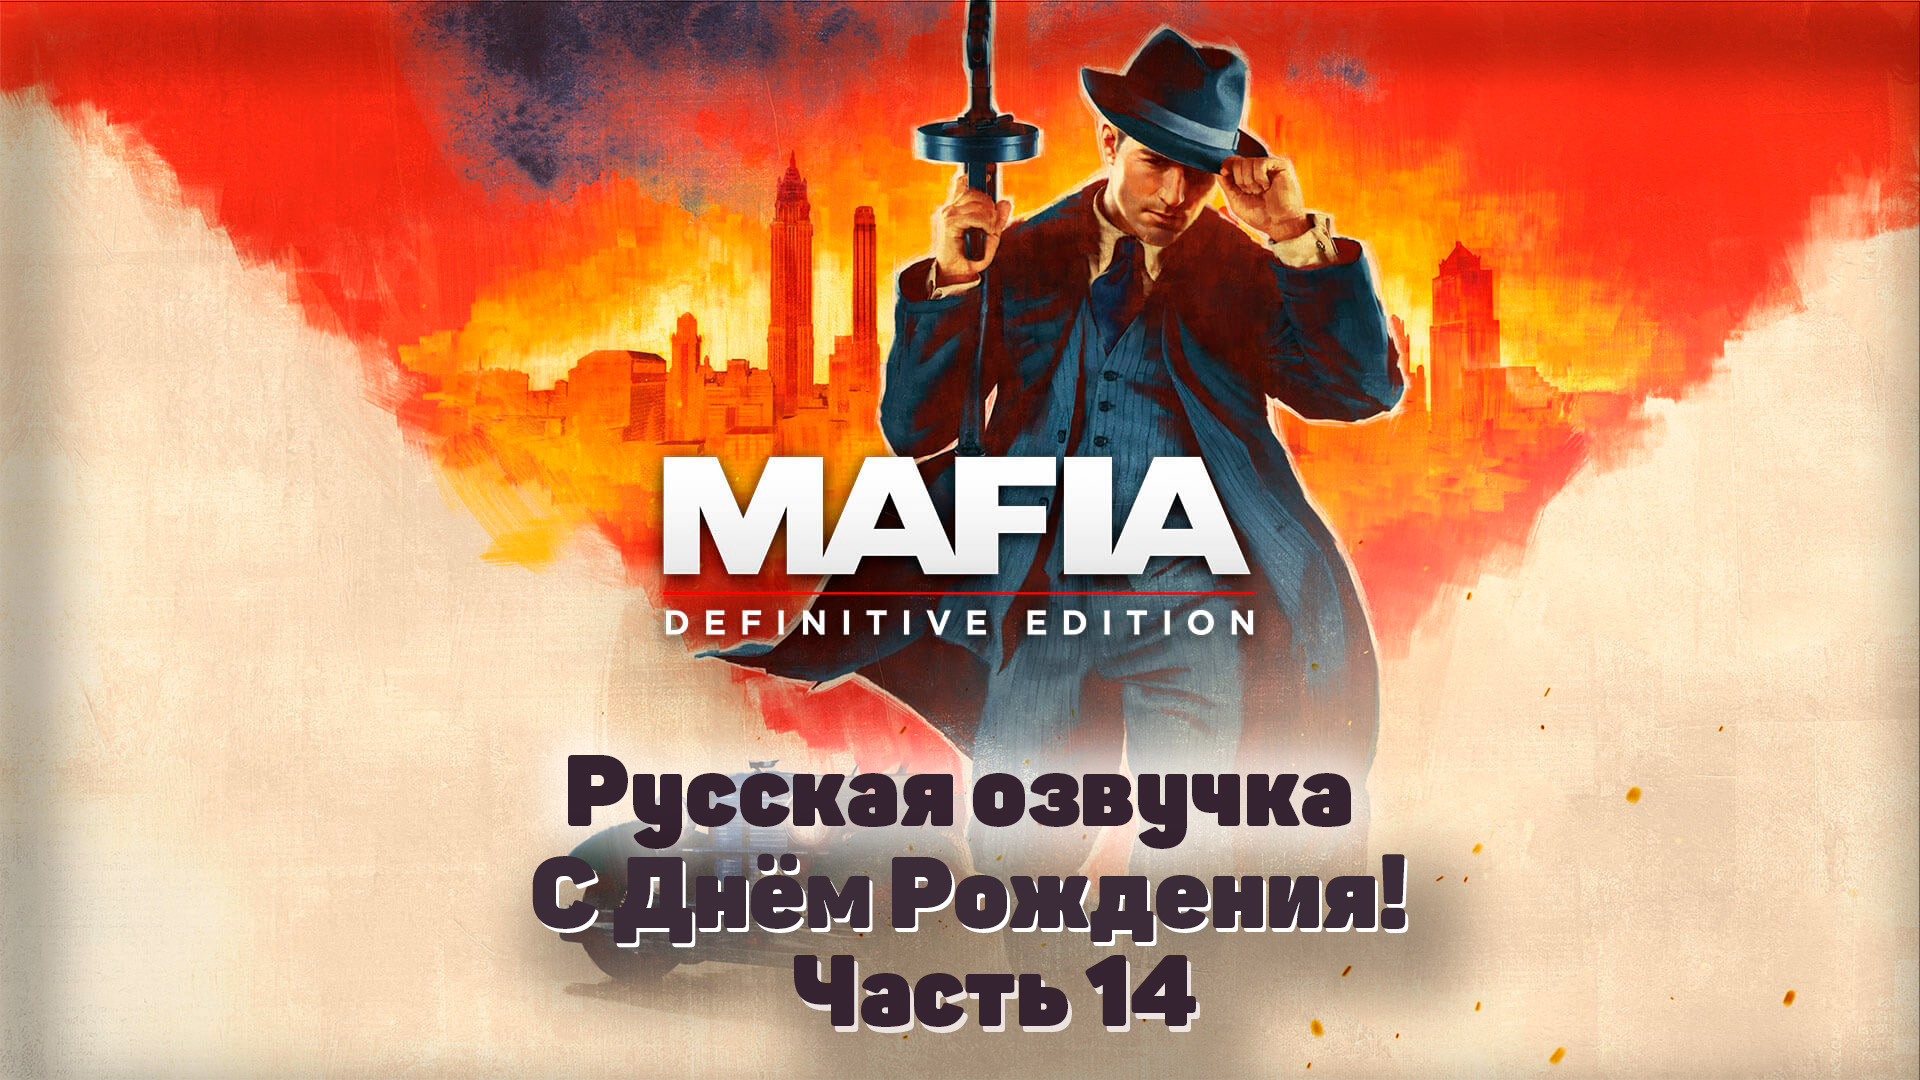 Mafia: Definitive Edition  Часть 14 С Днем рождения!  #Mafia #Tommy #TheCityOfLostHeaven